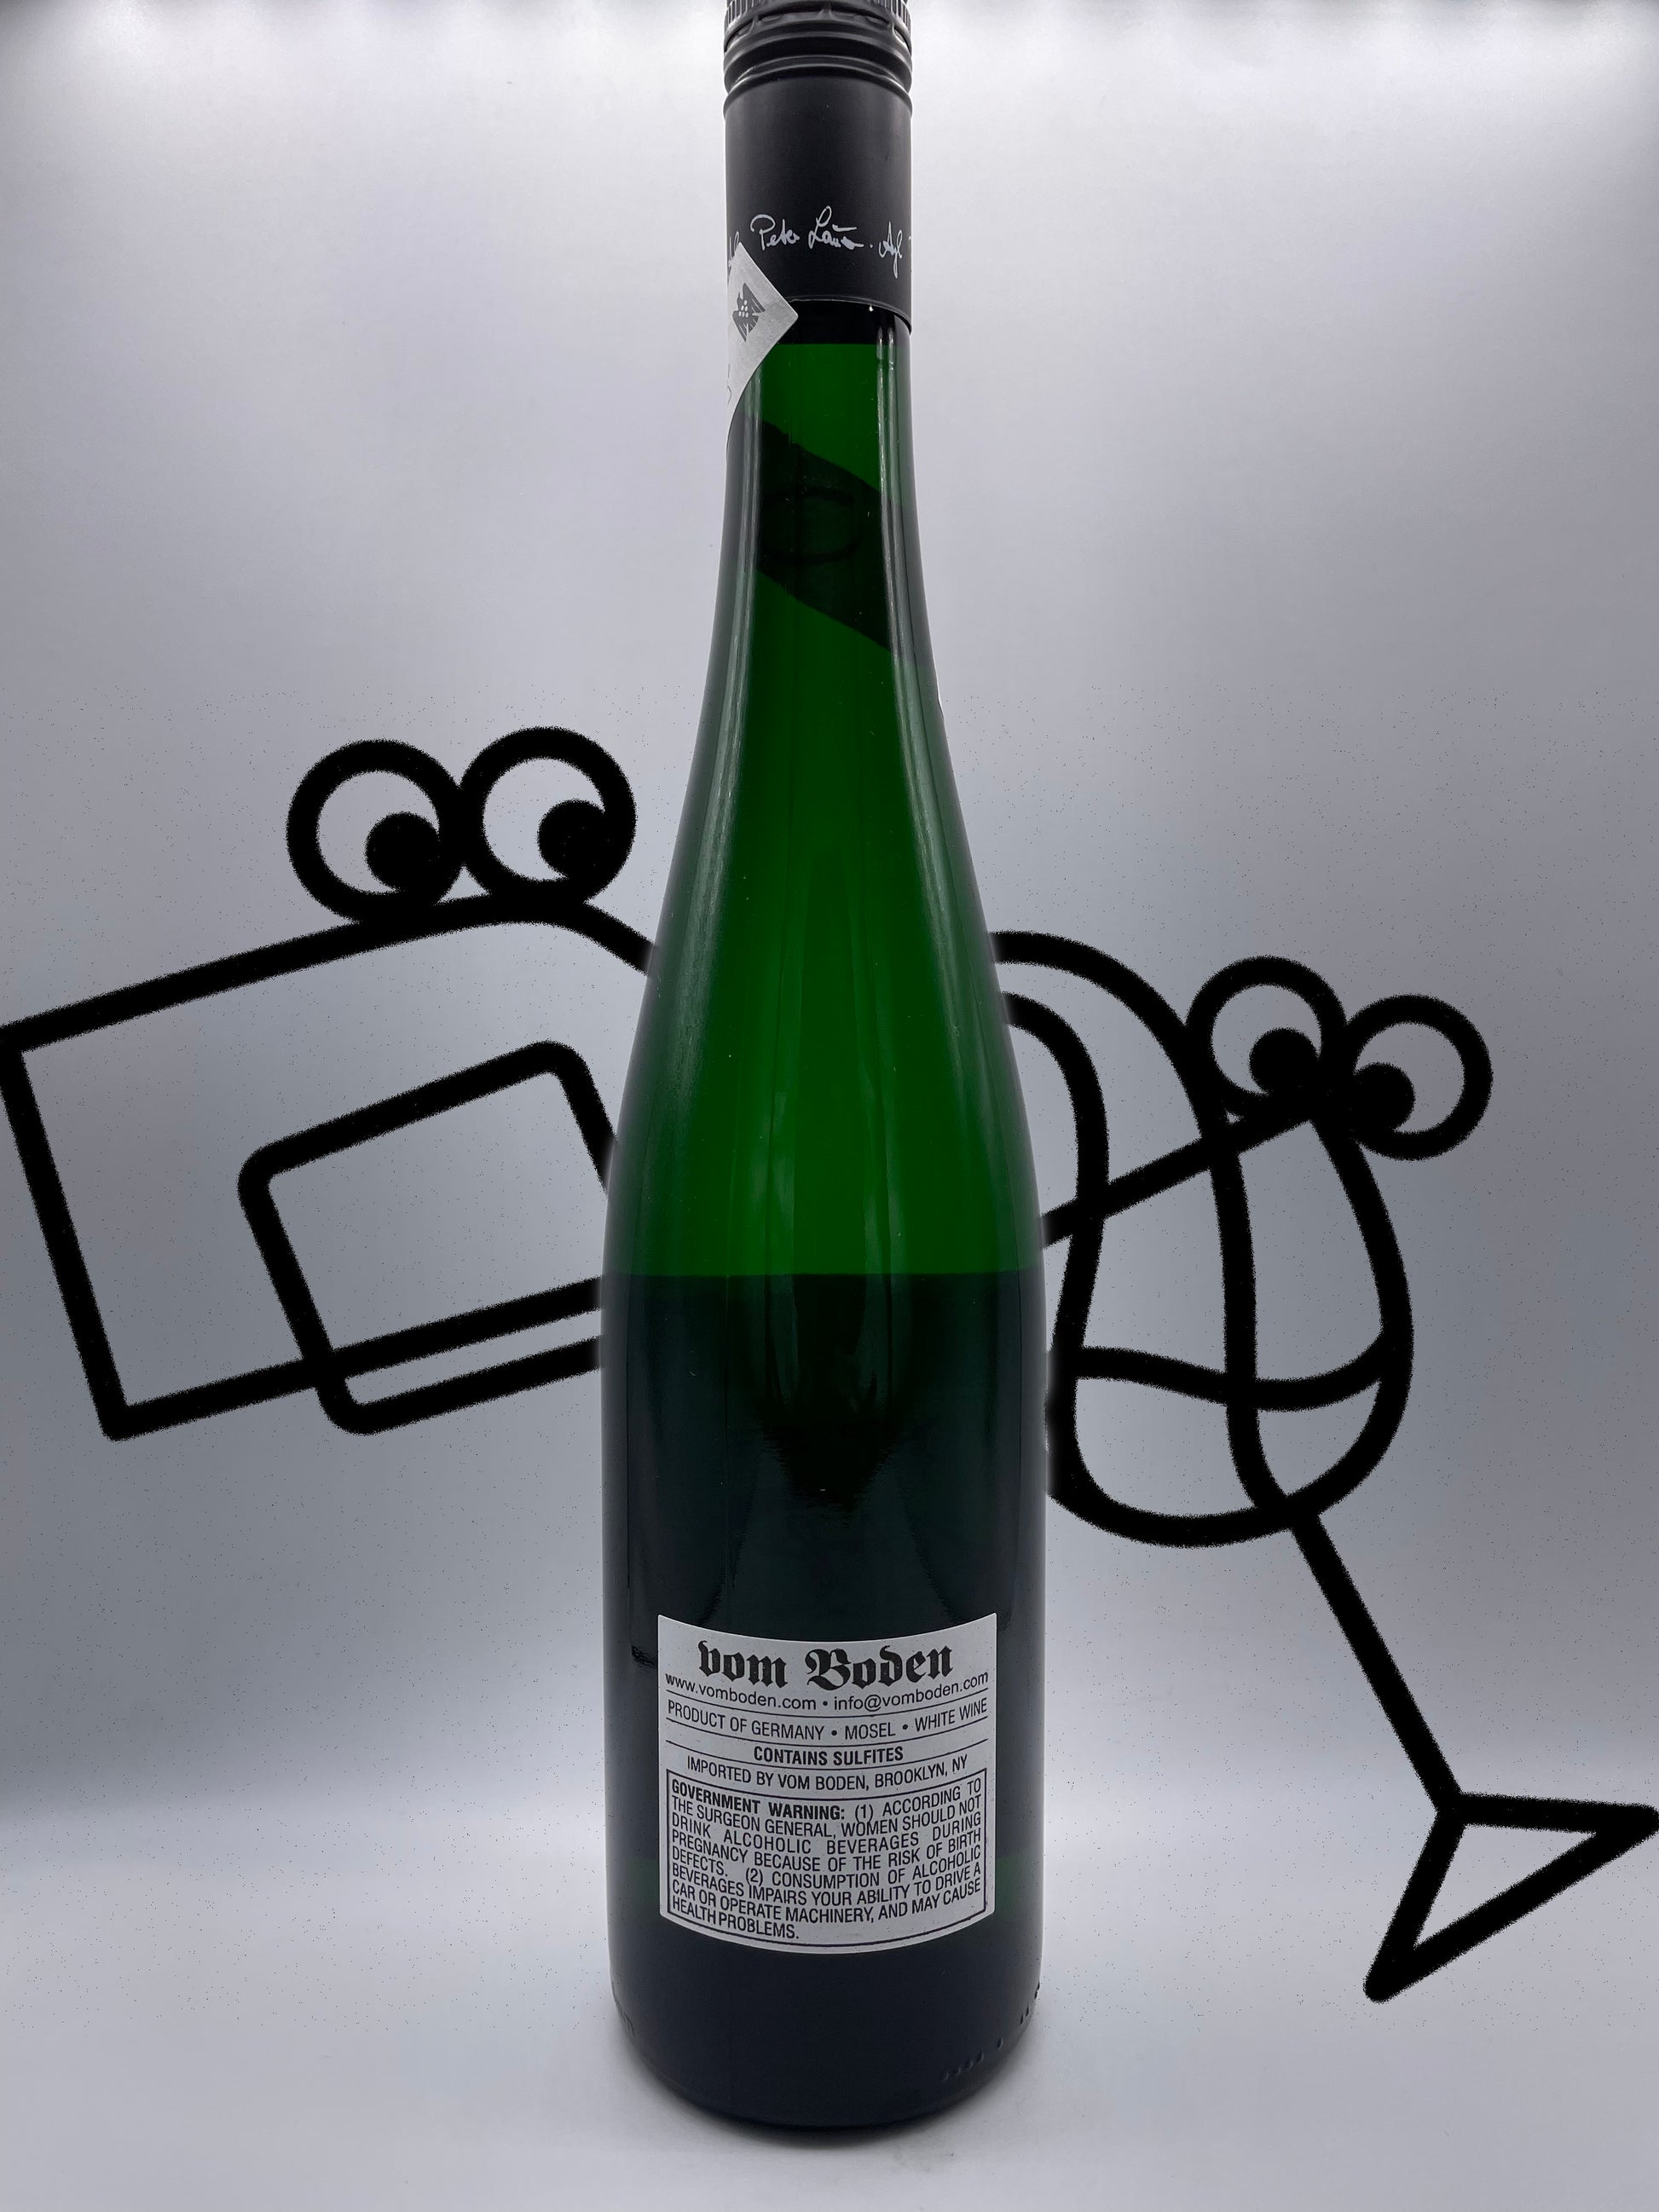 Peter Lauer Kabinett Ayler 'Fass 87 Special Edition' 2020 Saar, Mosel, Germany - Williston Park Wines & Spirits